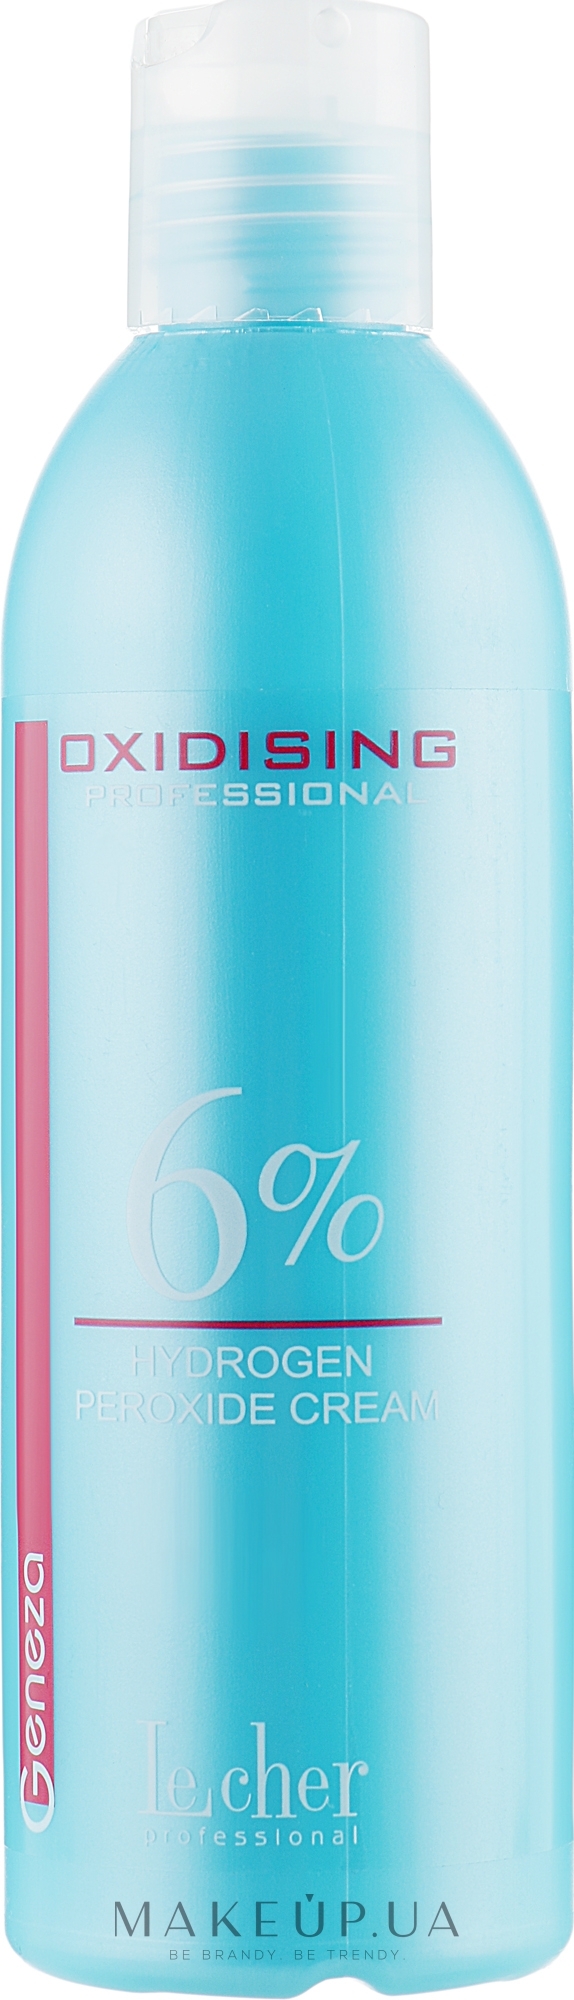 Окислювальна емульсія 6 % - Lecher Professional Geneza Hydrogen Peroxide Cream — фото 200ml